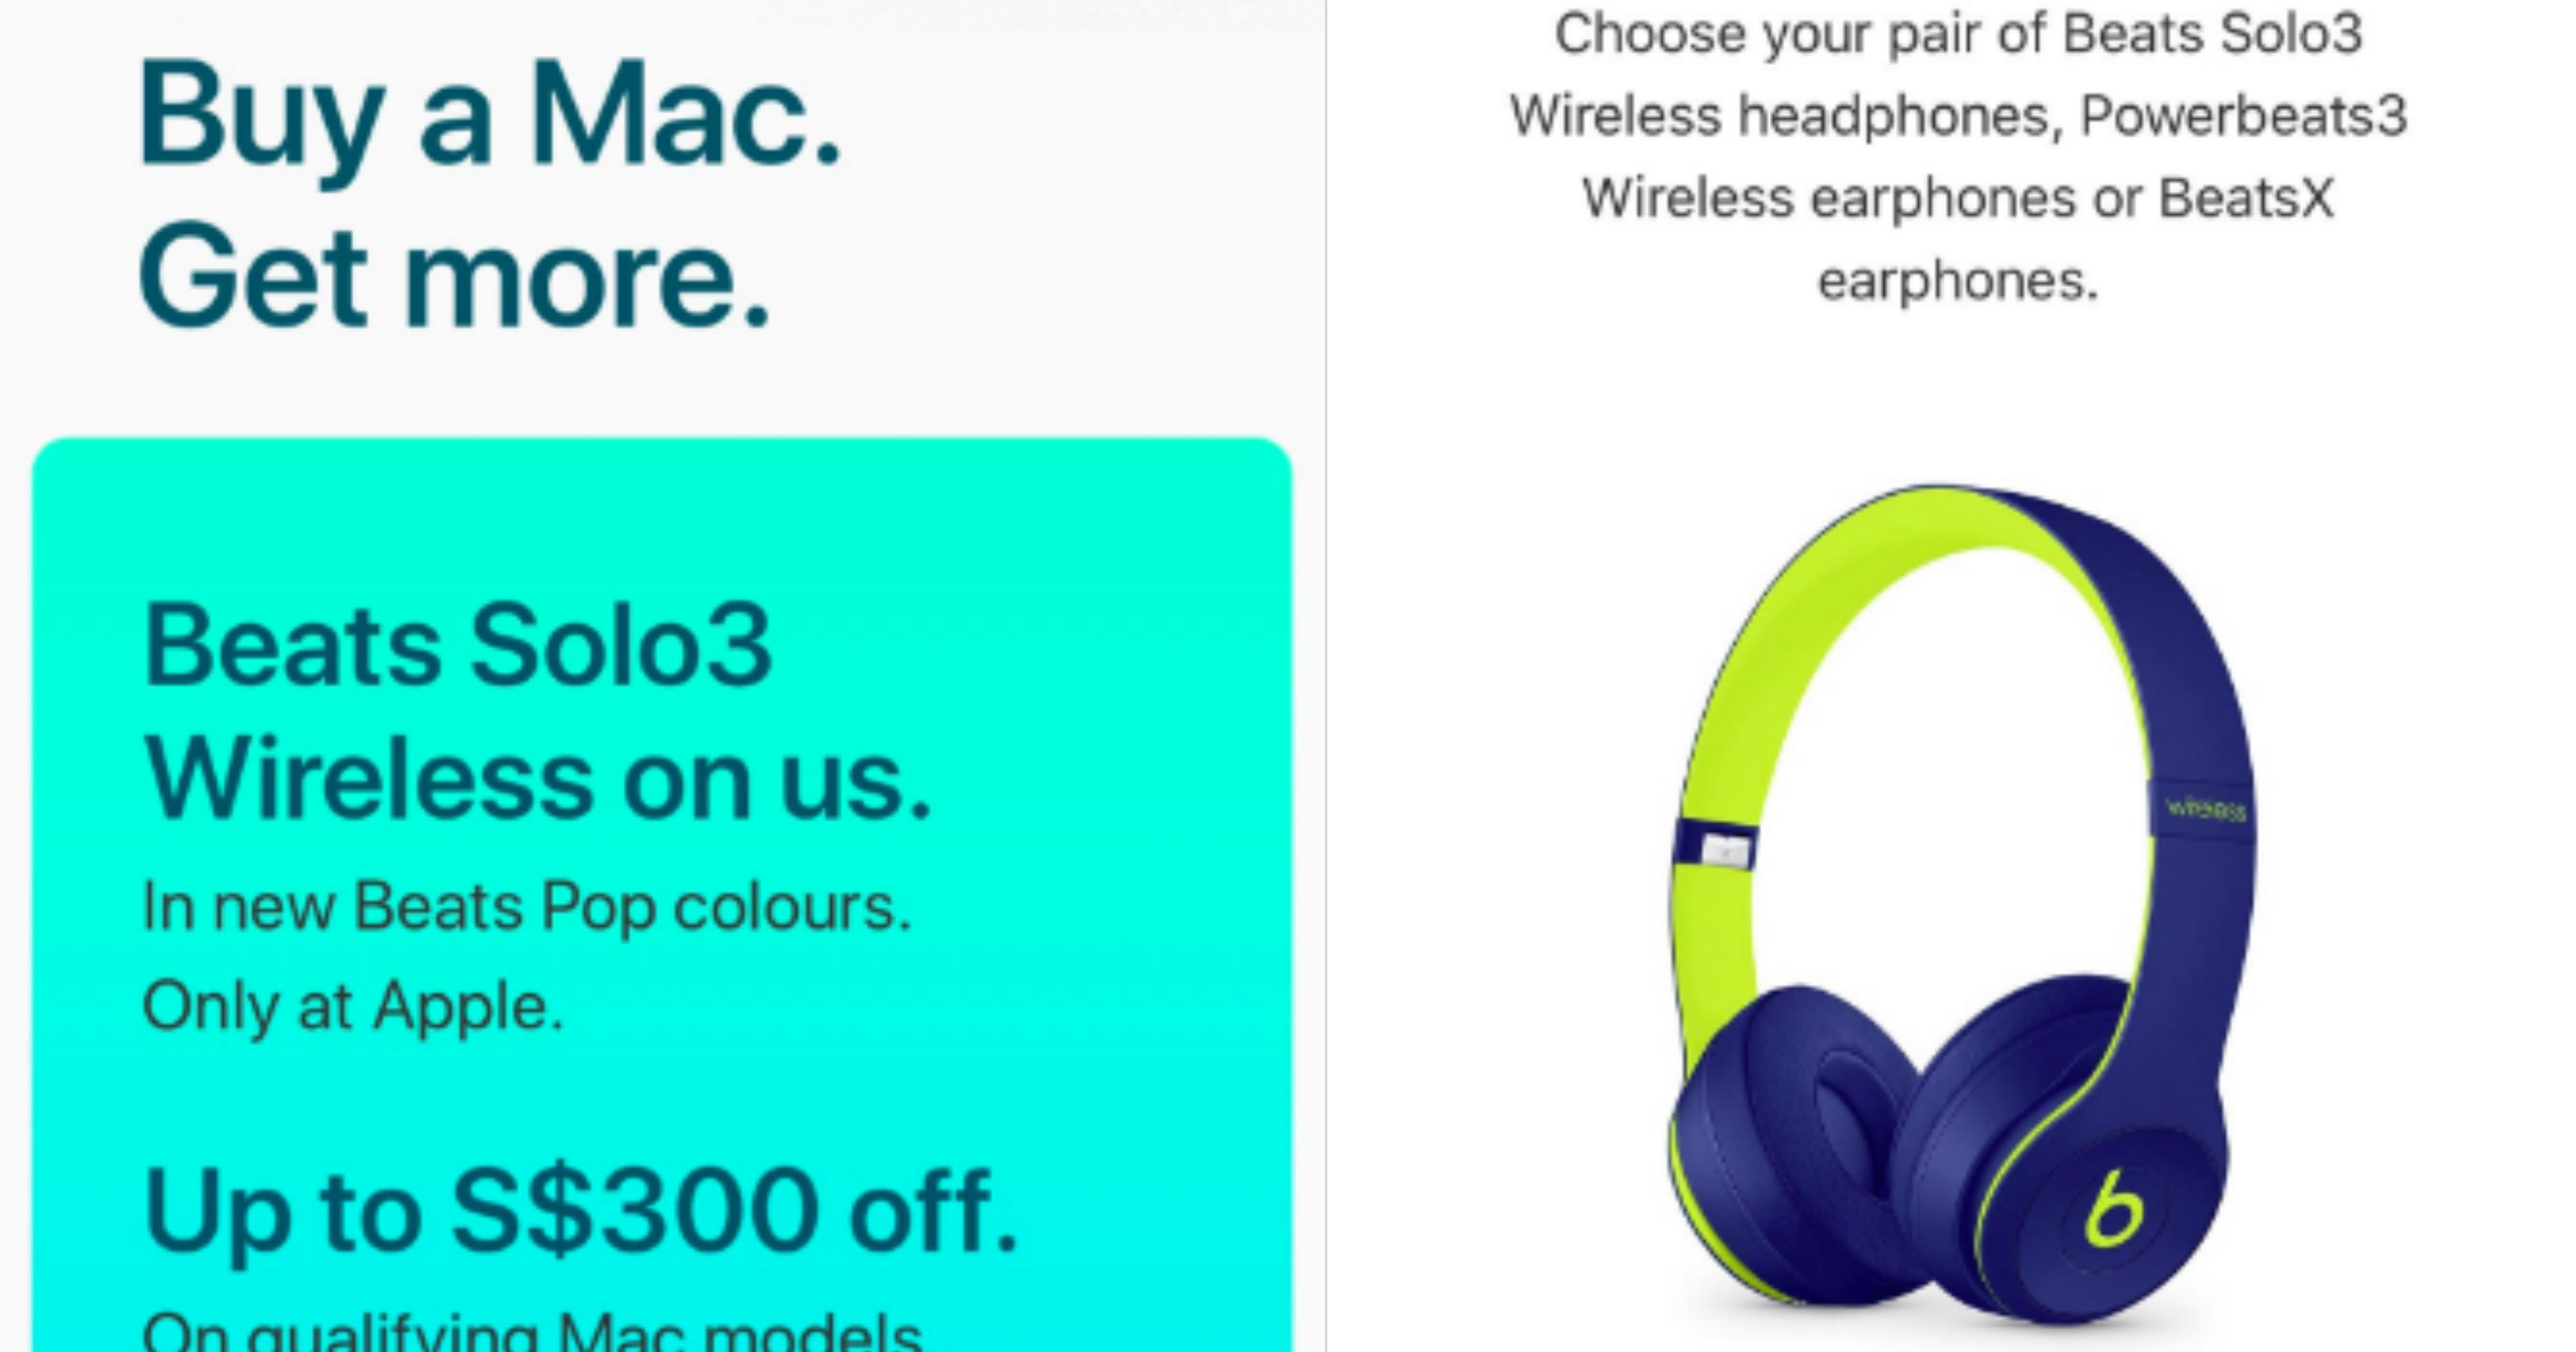 buy a mac get free beats